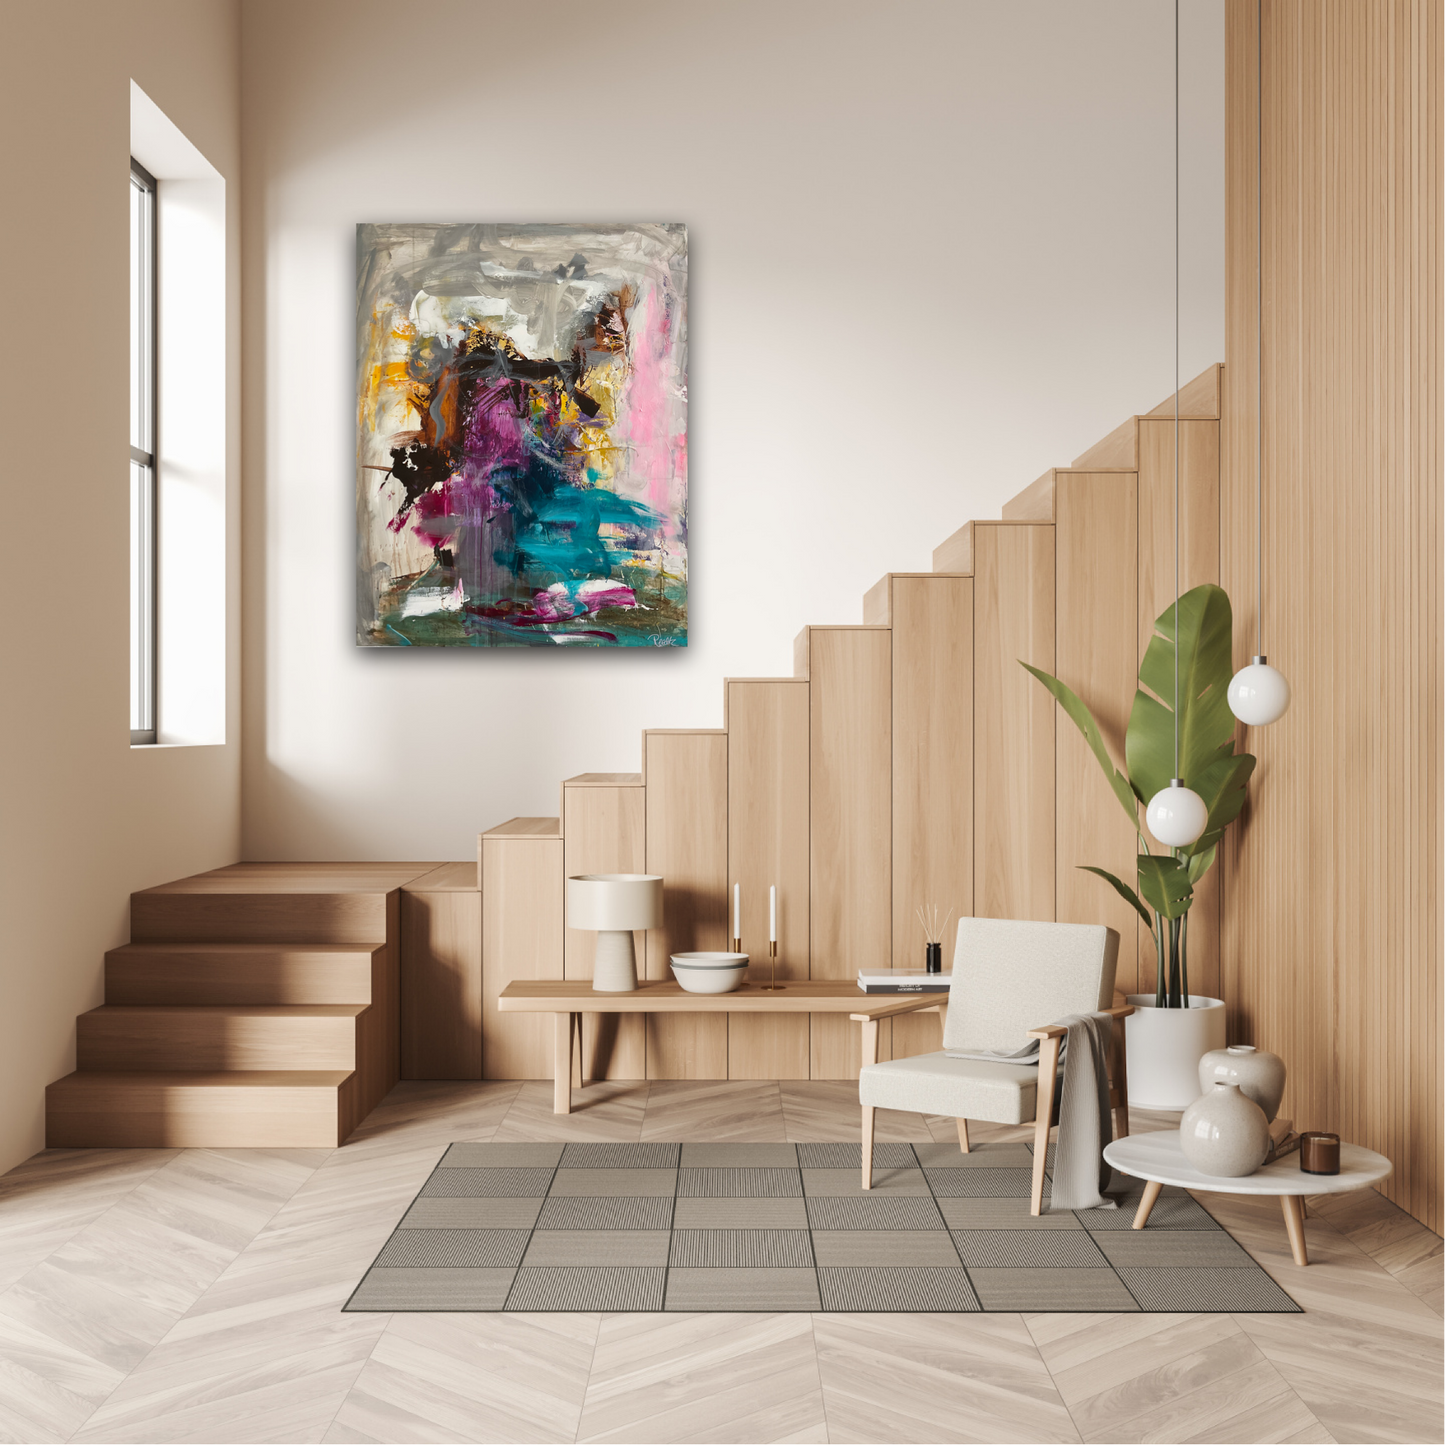 Abstrakt maleri, 70x90 cm, "Nr. 10" by Lone Reedtz , Abstrakt ekspressivt akrylmaleri på lærred